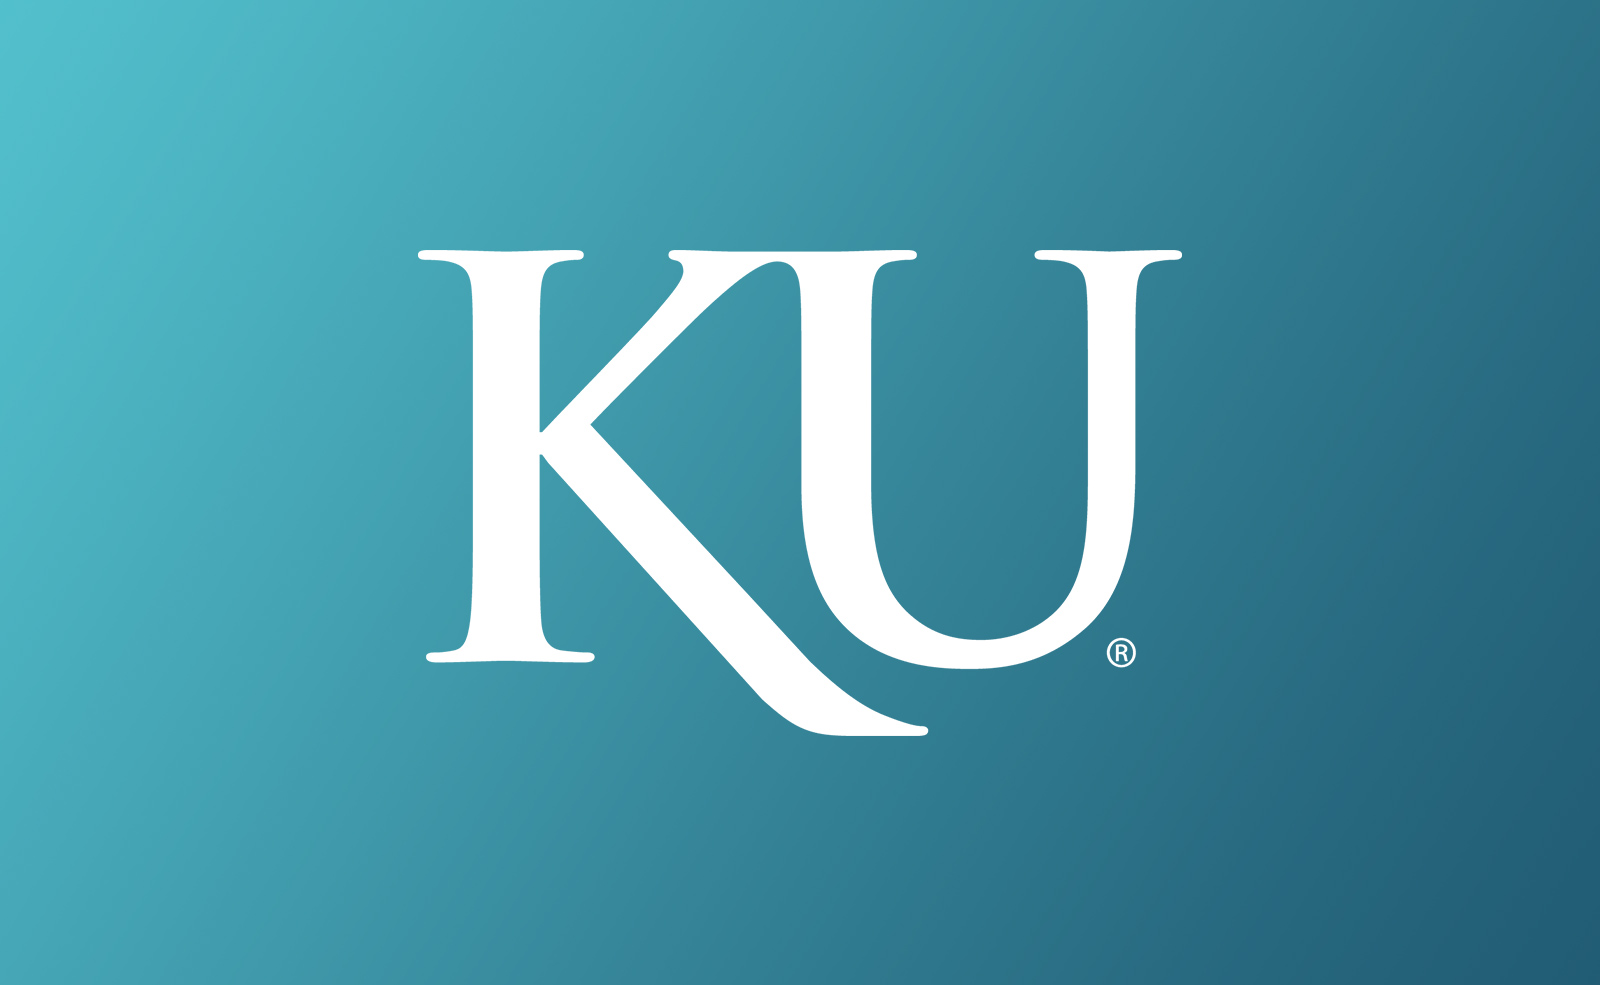 Kansas University logo